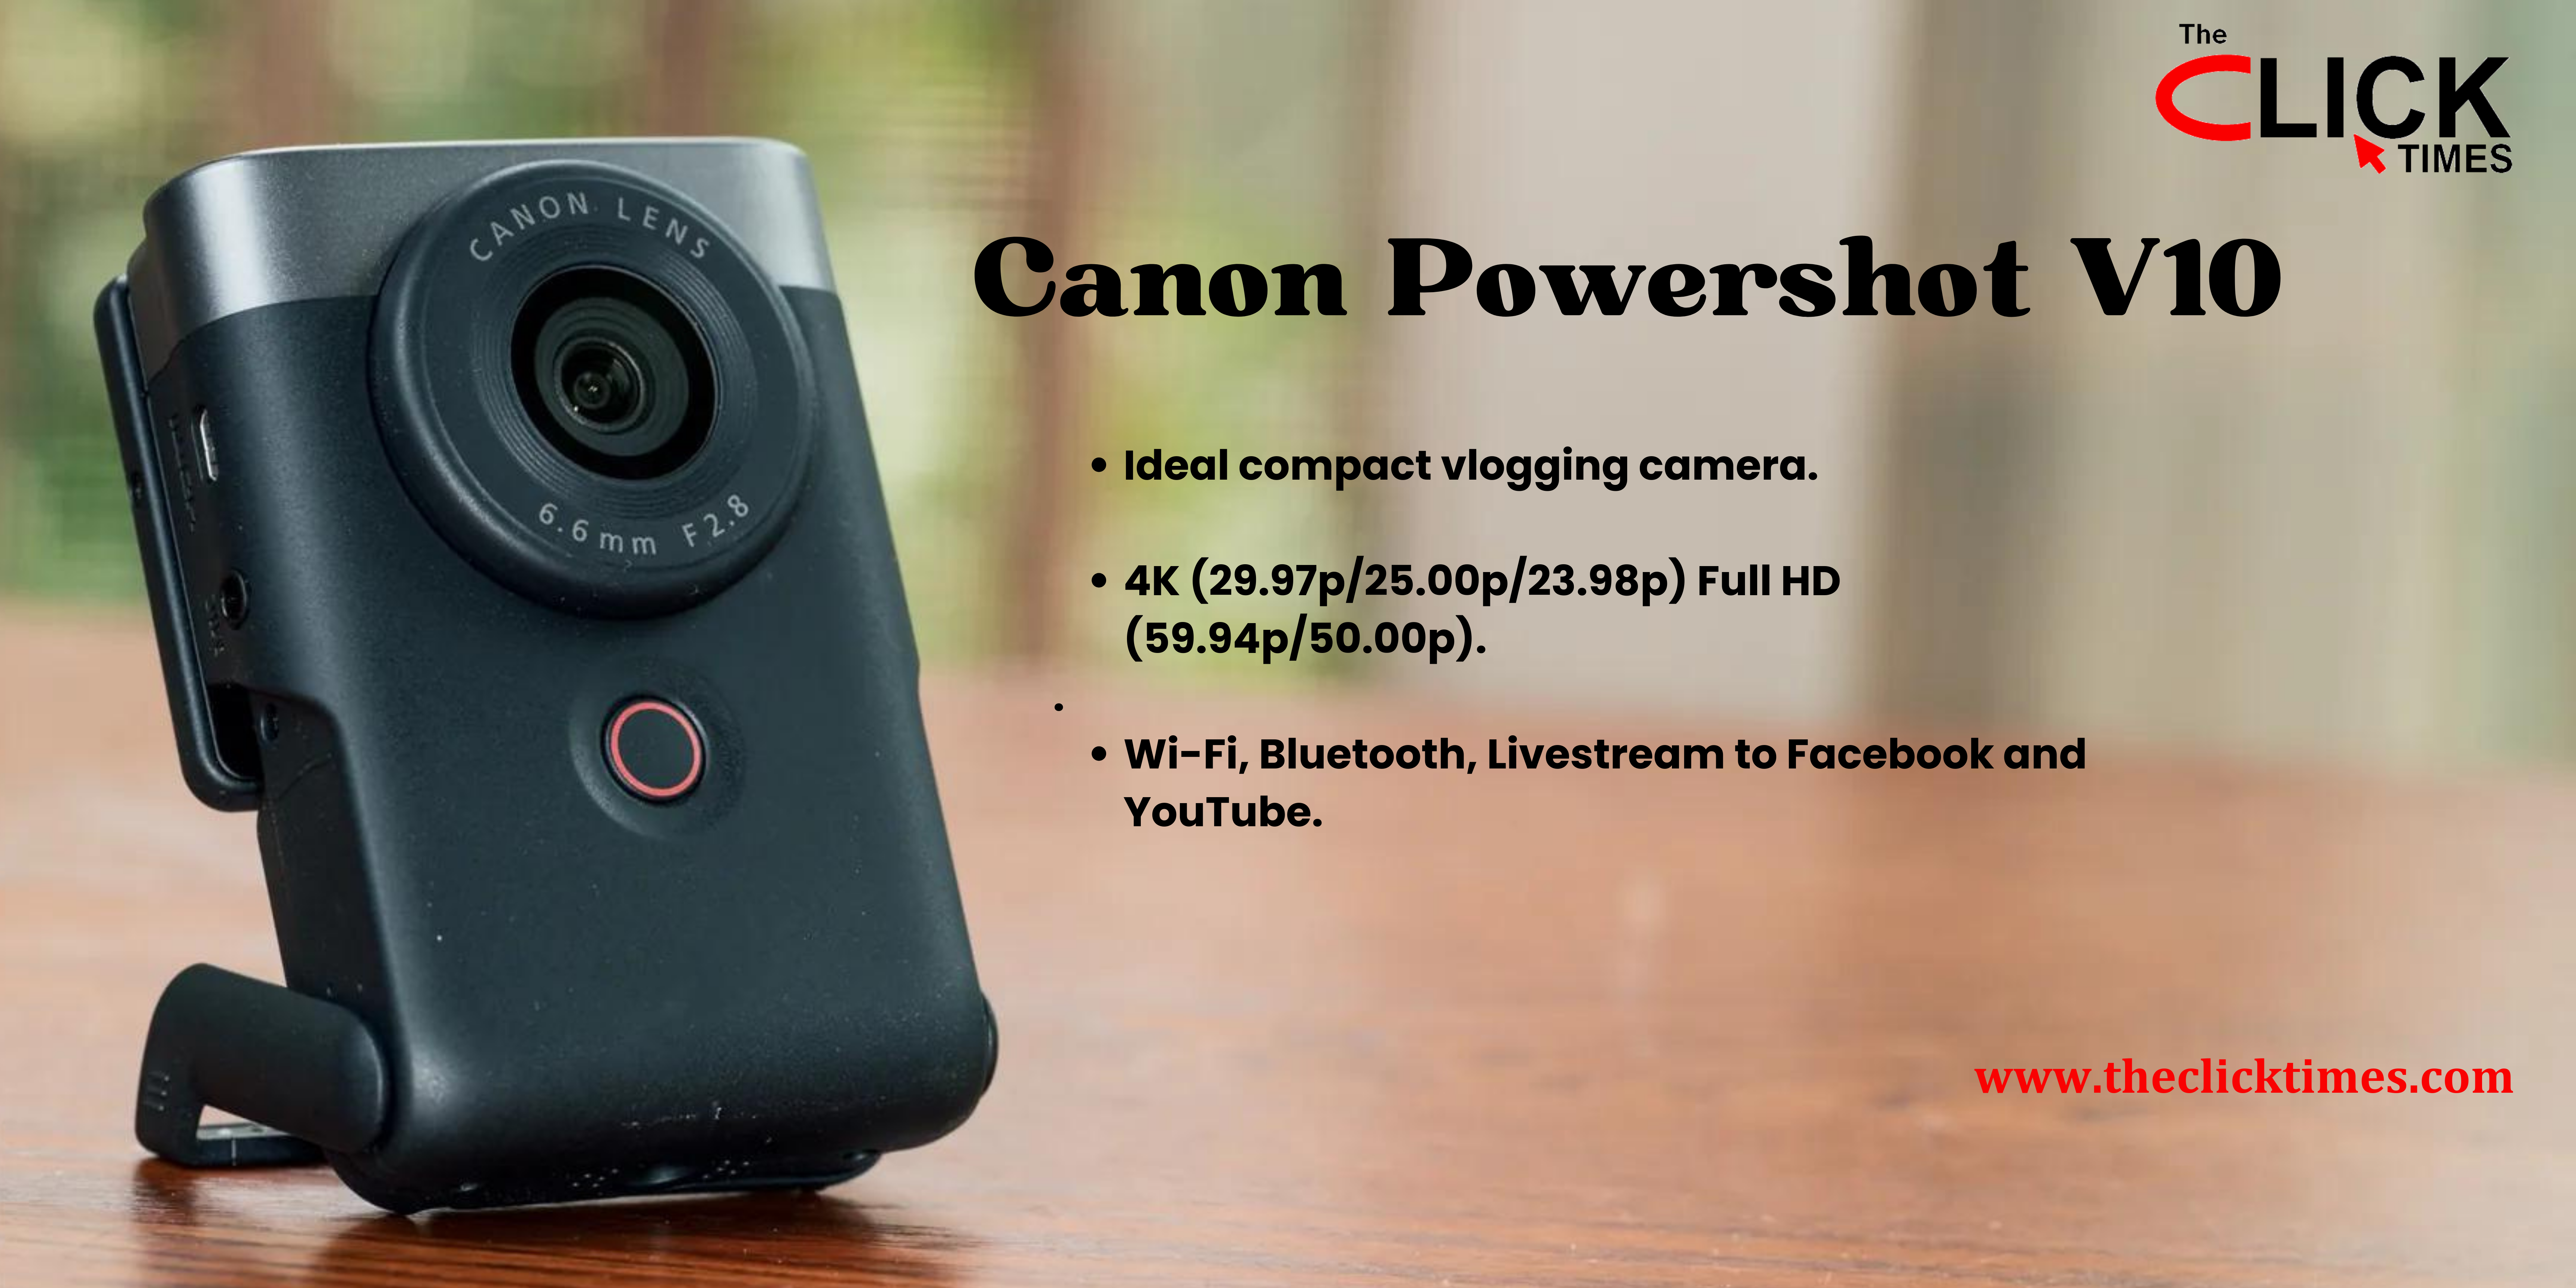 The Canon Powershot V10